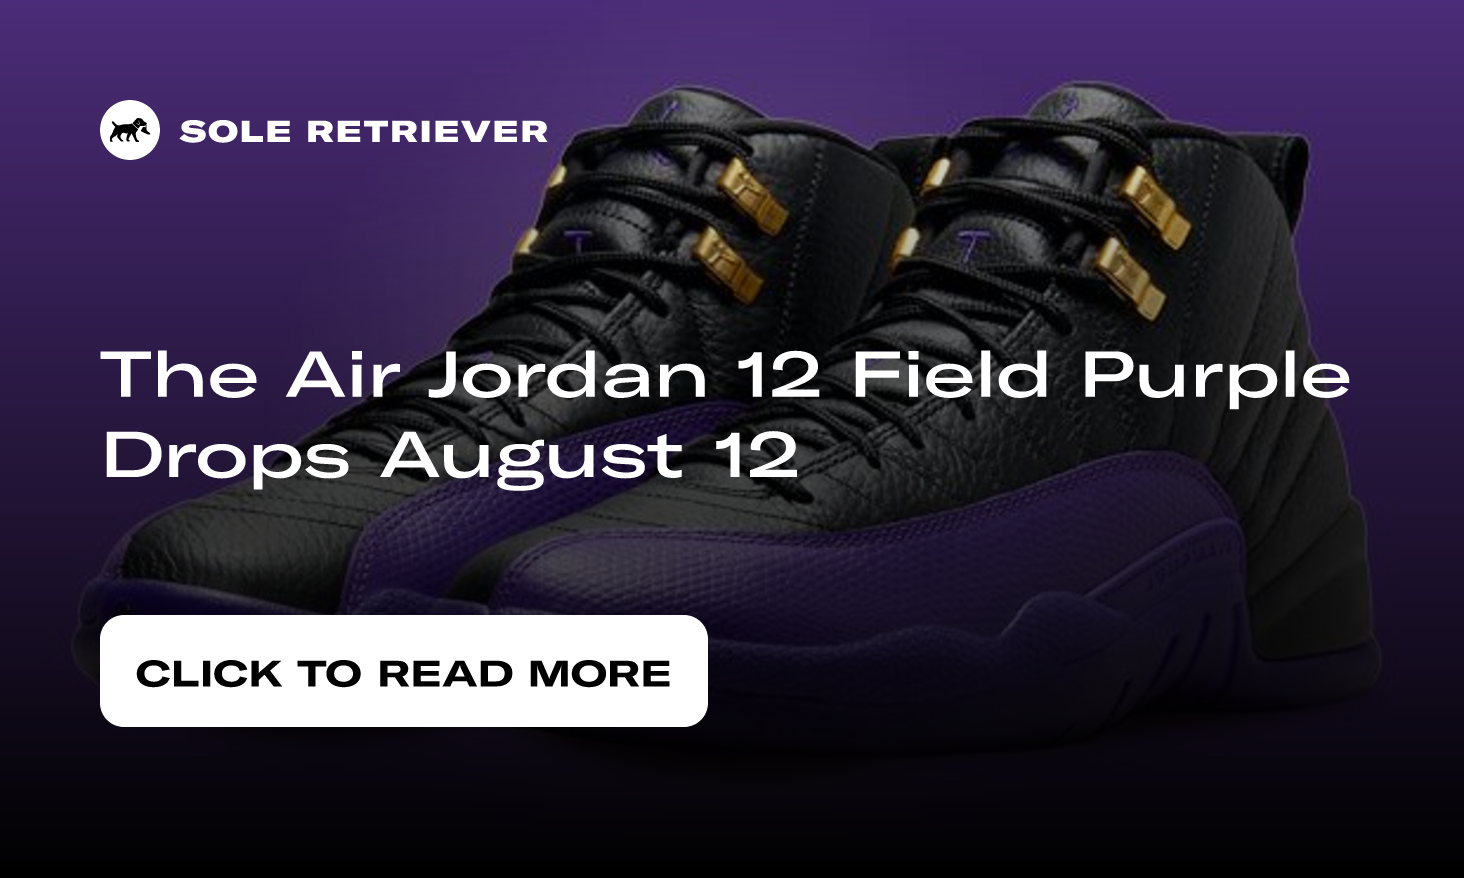 The Air Jordan 12 Field Purple Drops August 12